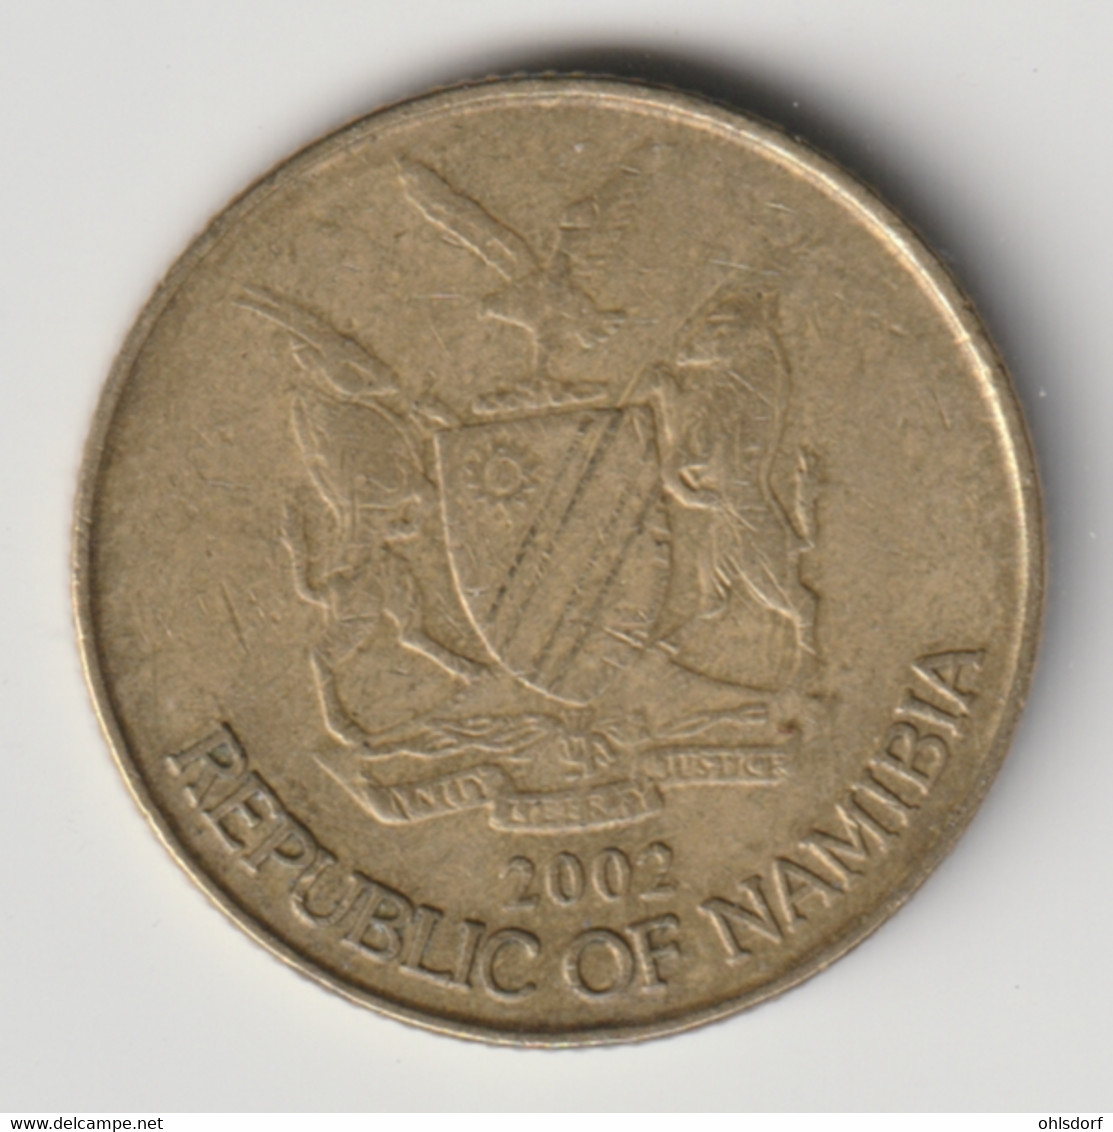 NAMIBIA 2002: 1 Dollar, KM 4 - Namibia